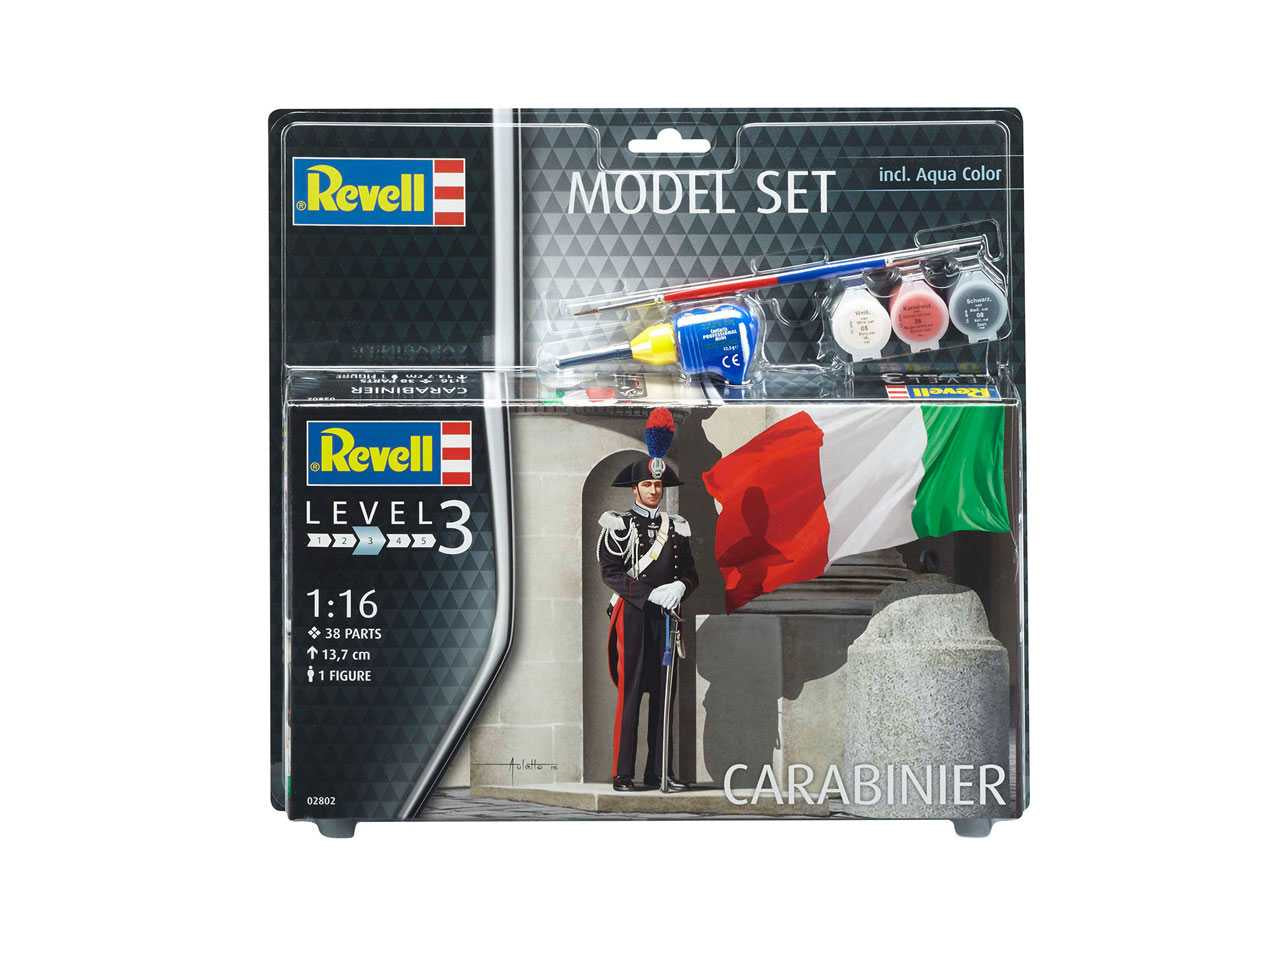 Revell Model Set 62802 Carabinier Includes Paints, Glue & Brush - DC Models